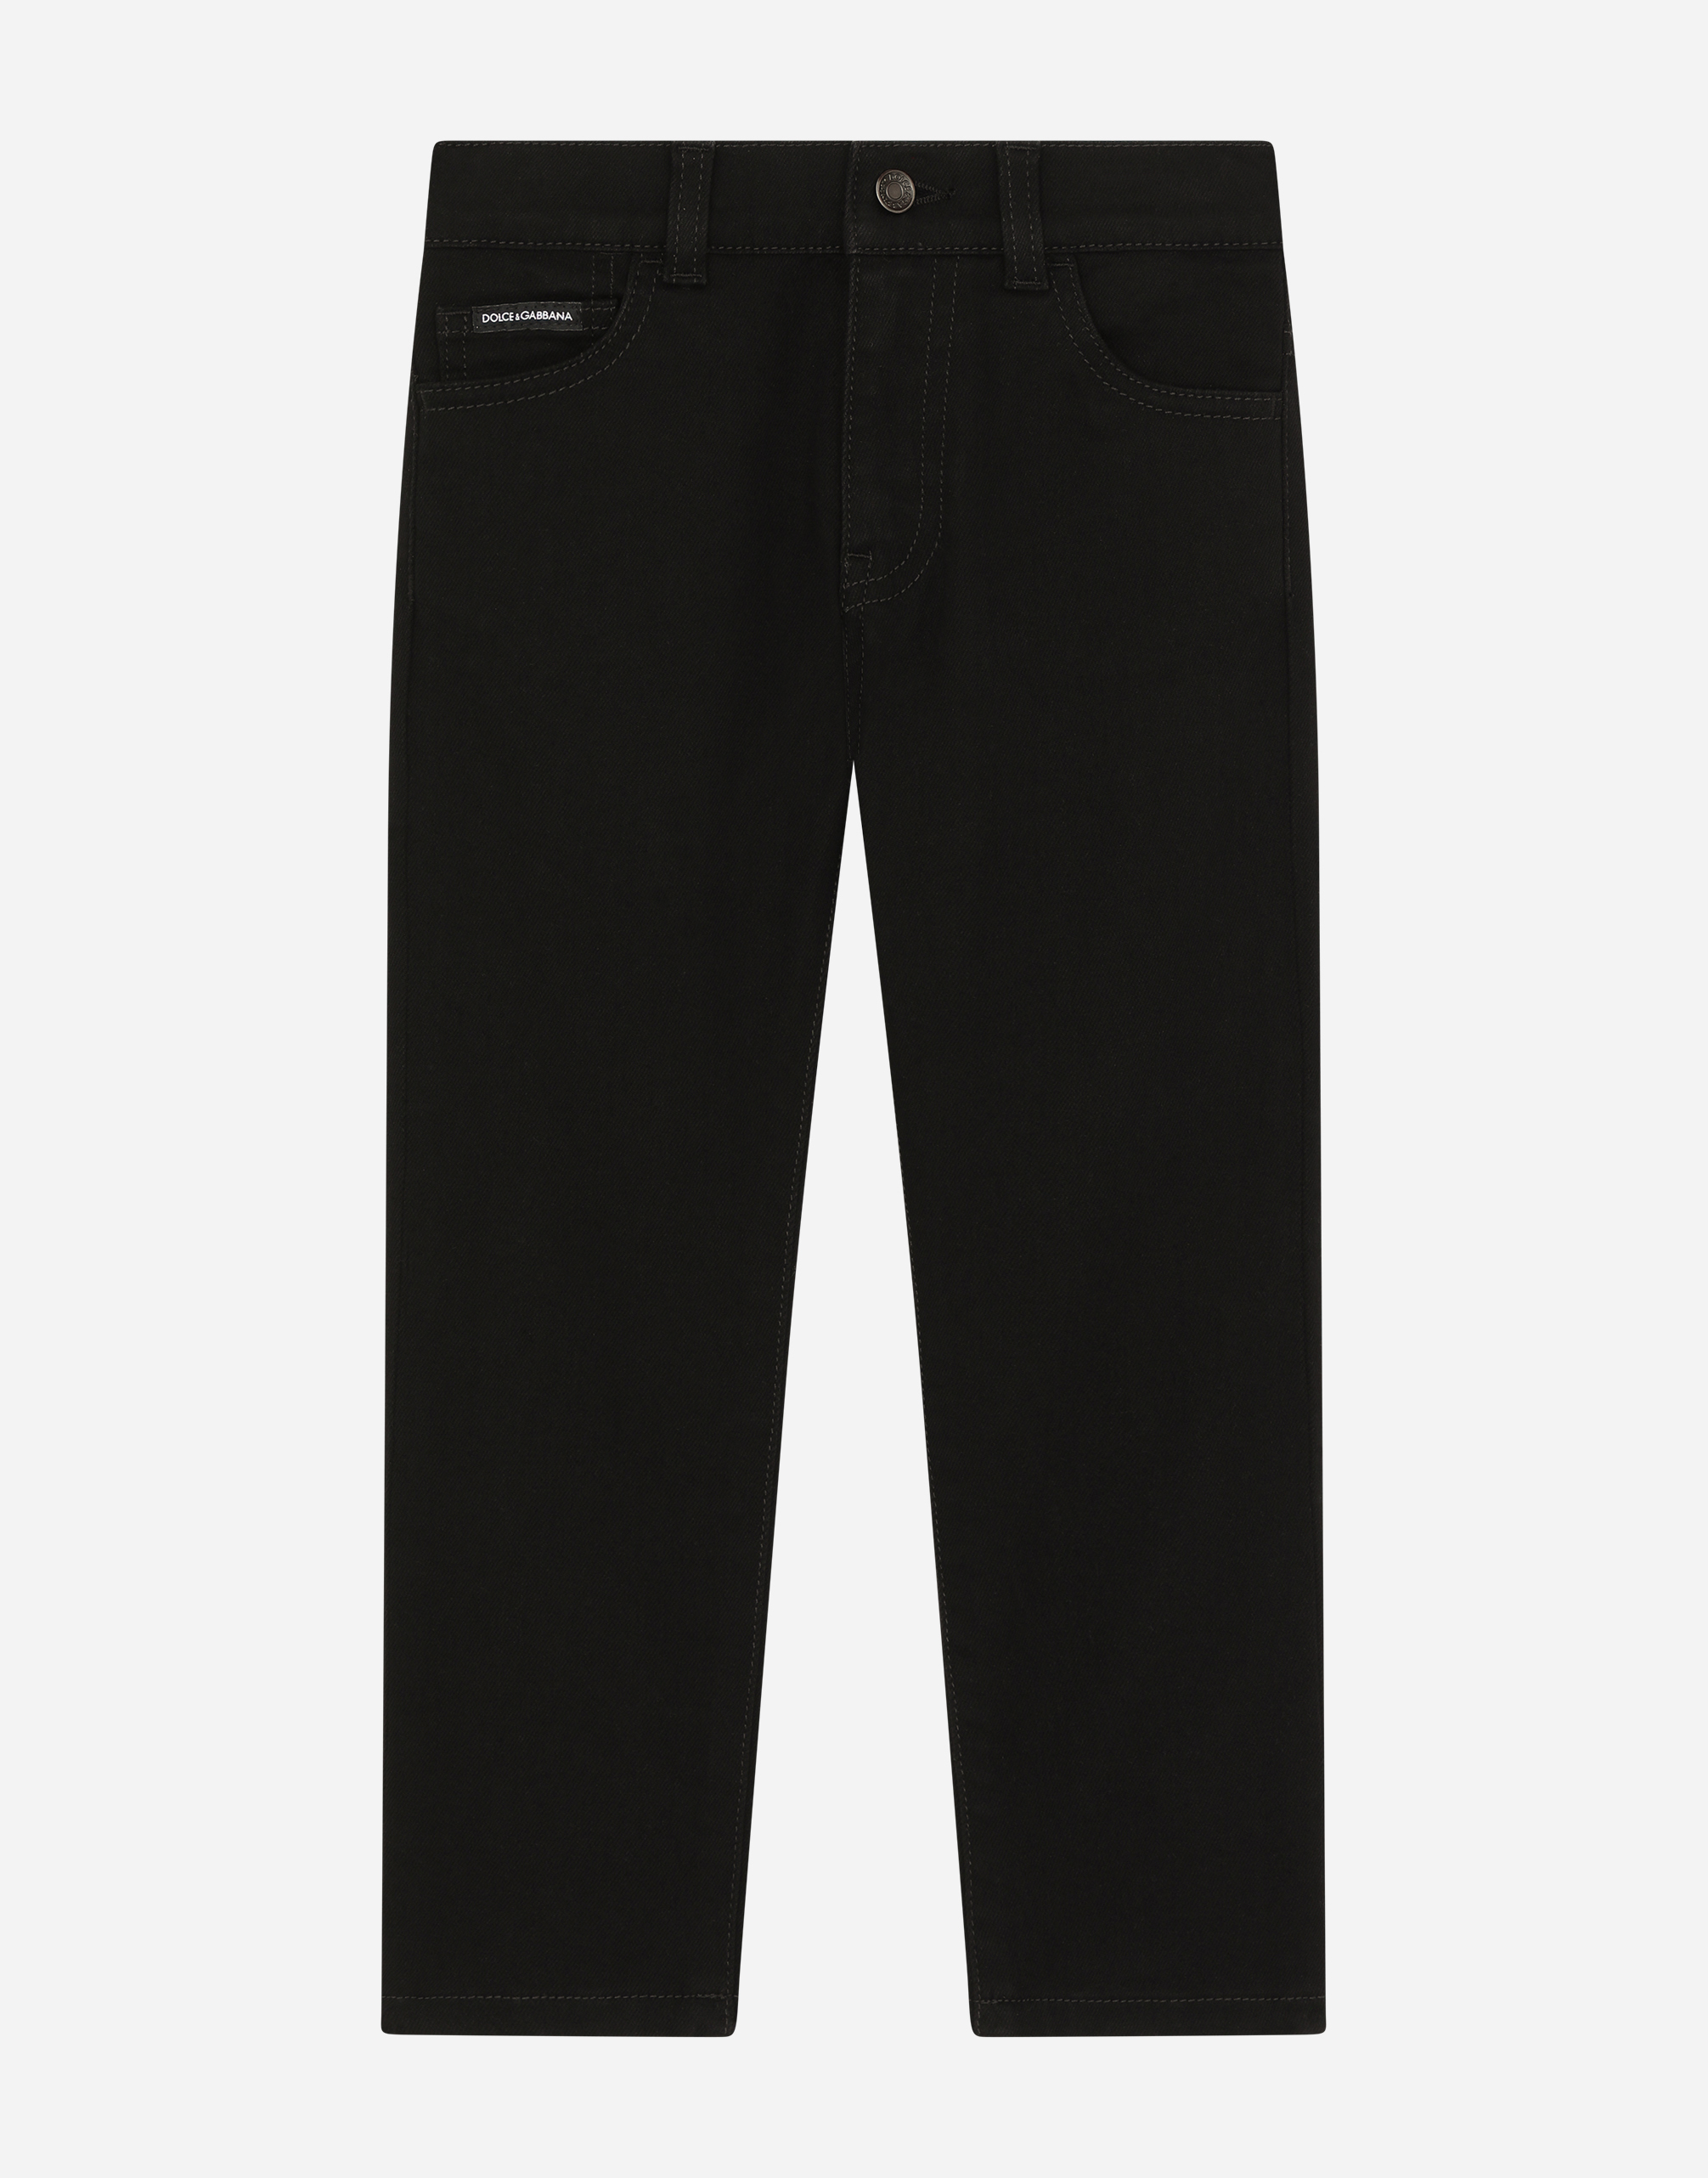 Black slim-fit stretch jeans in Black